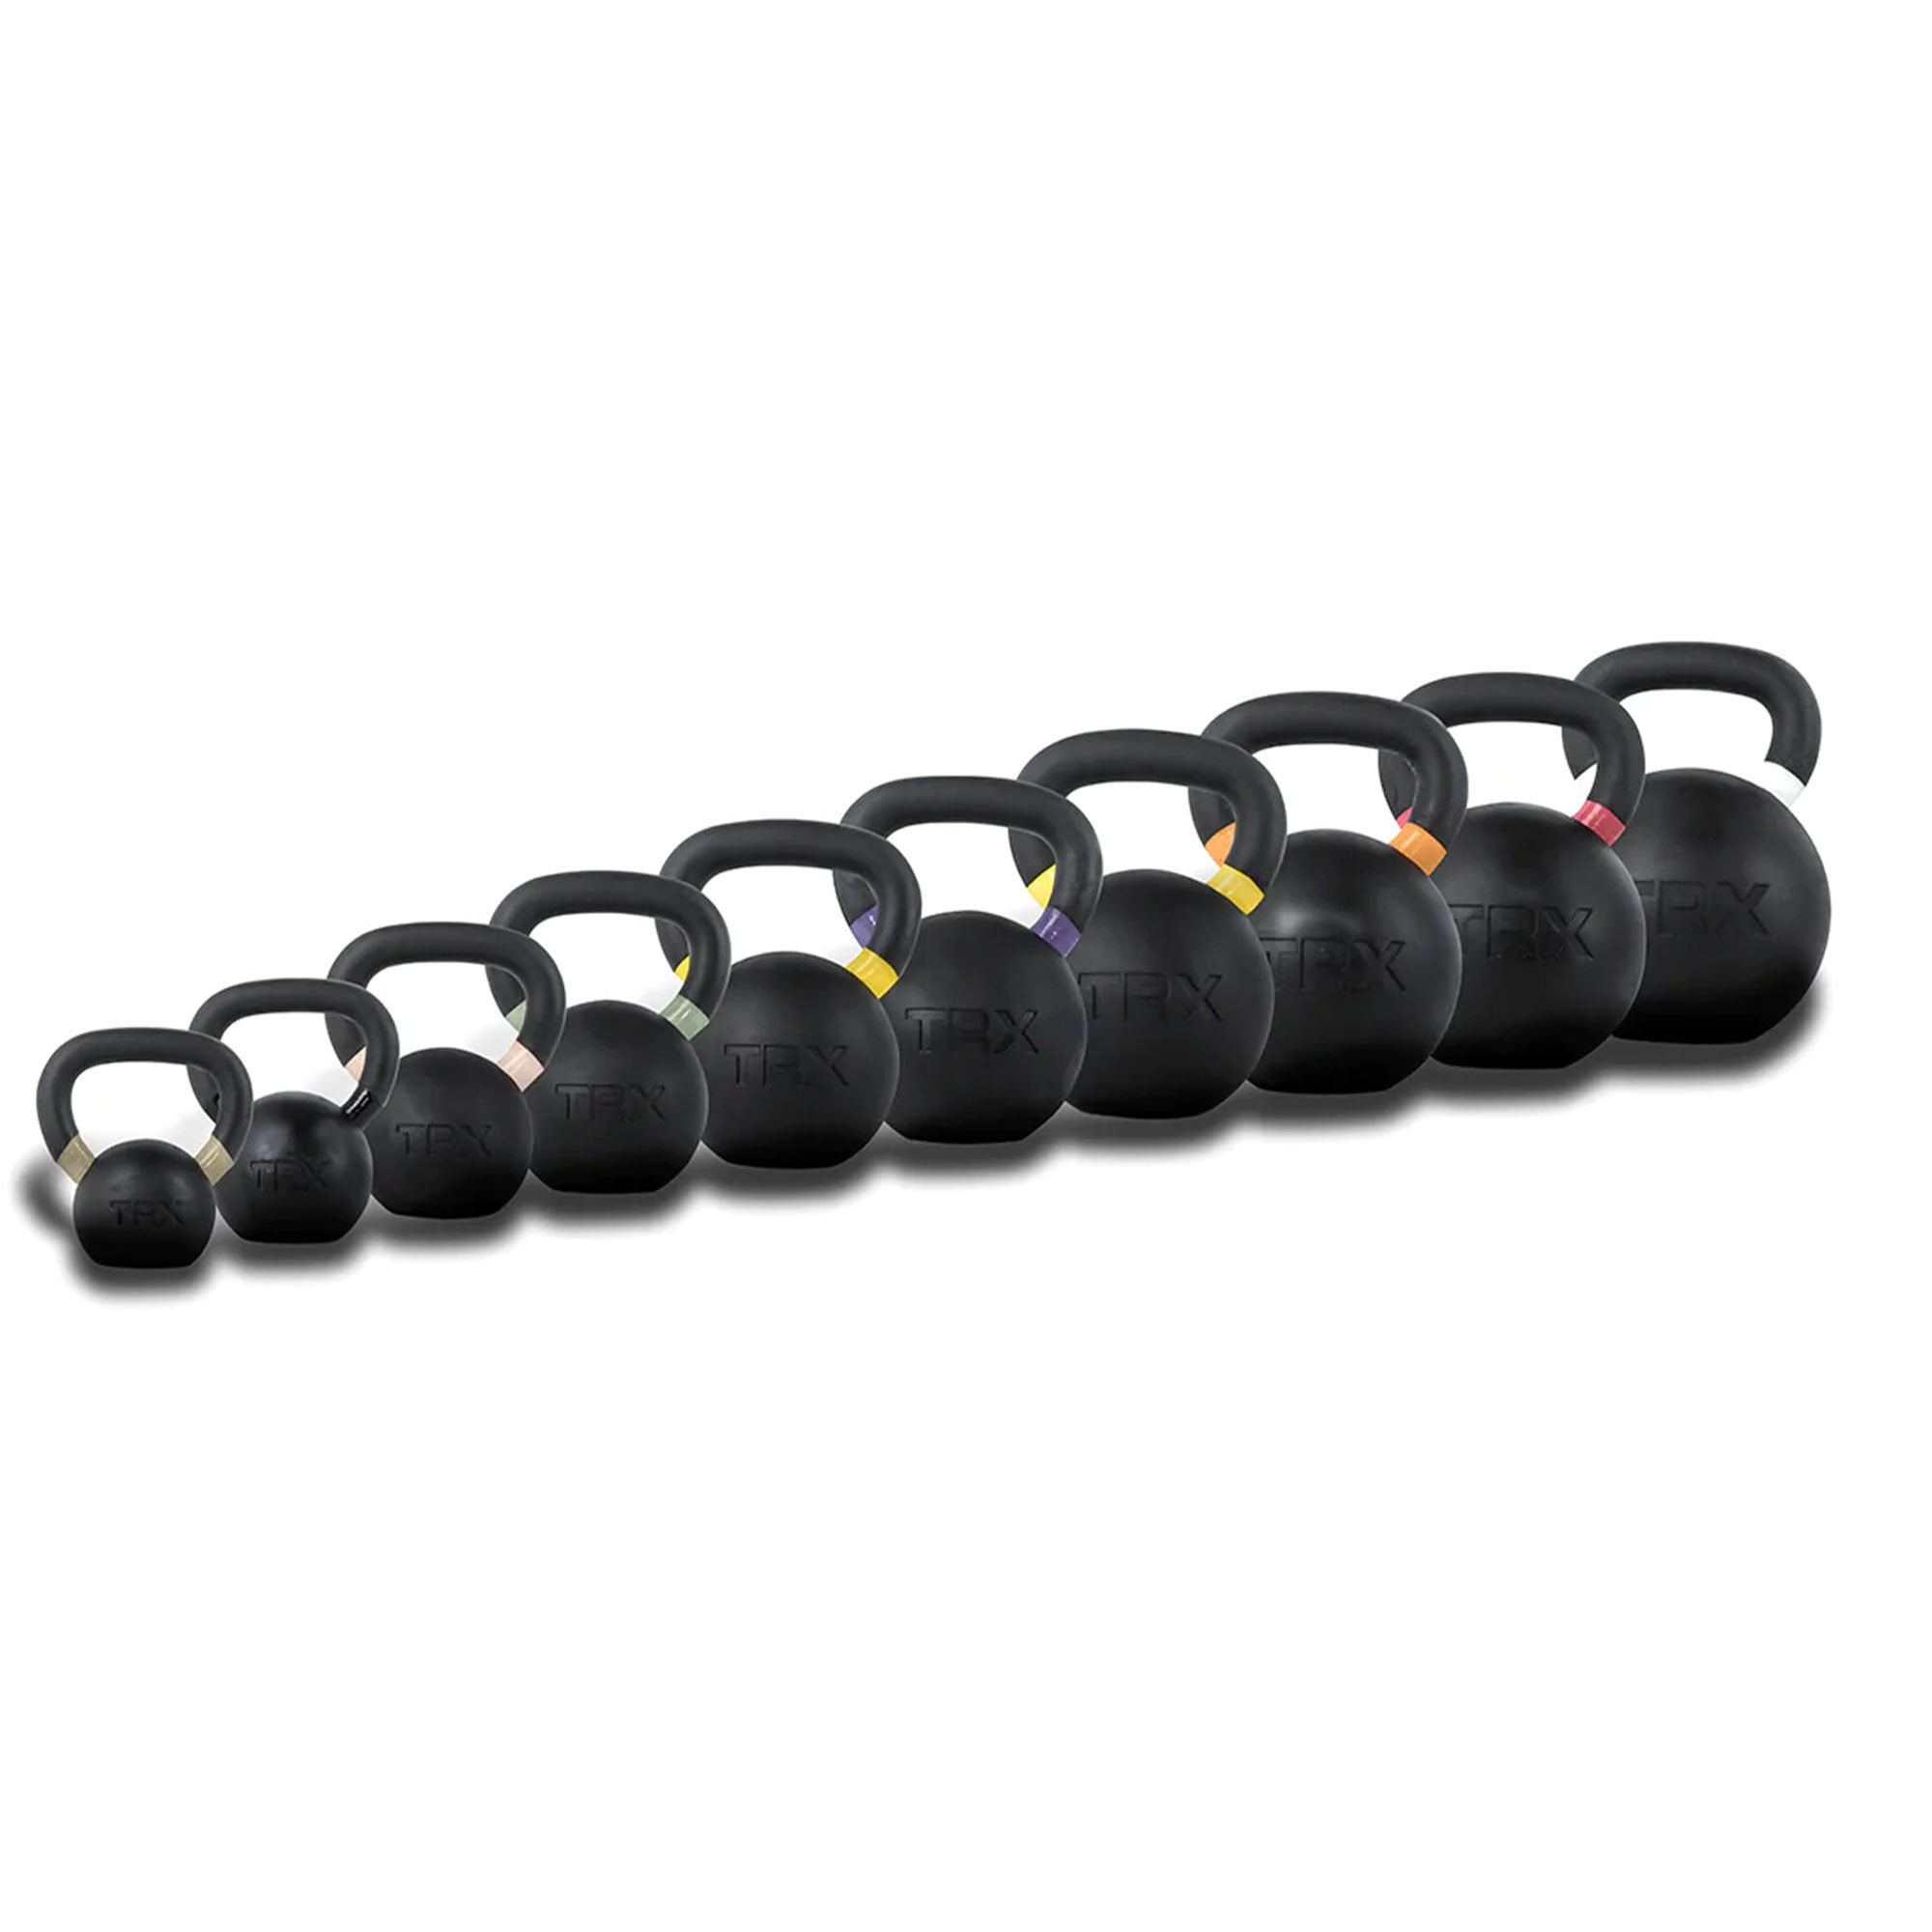 TRX Rubber Coated Kettlebell for Strength Training, 35.2 Pounds Walmart.com